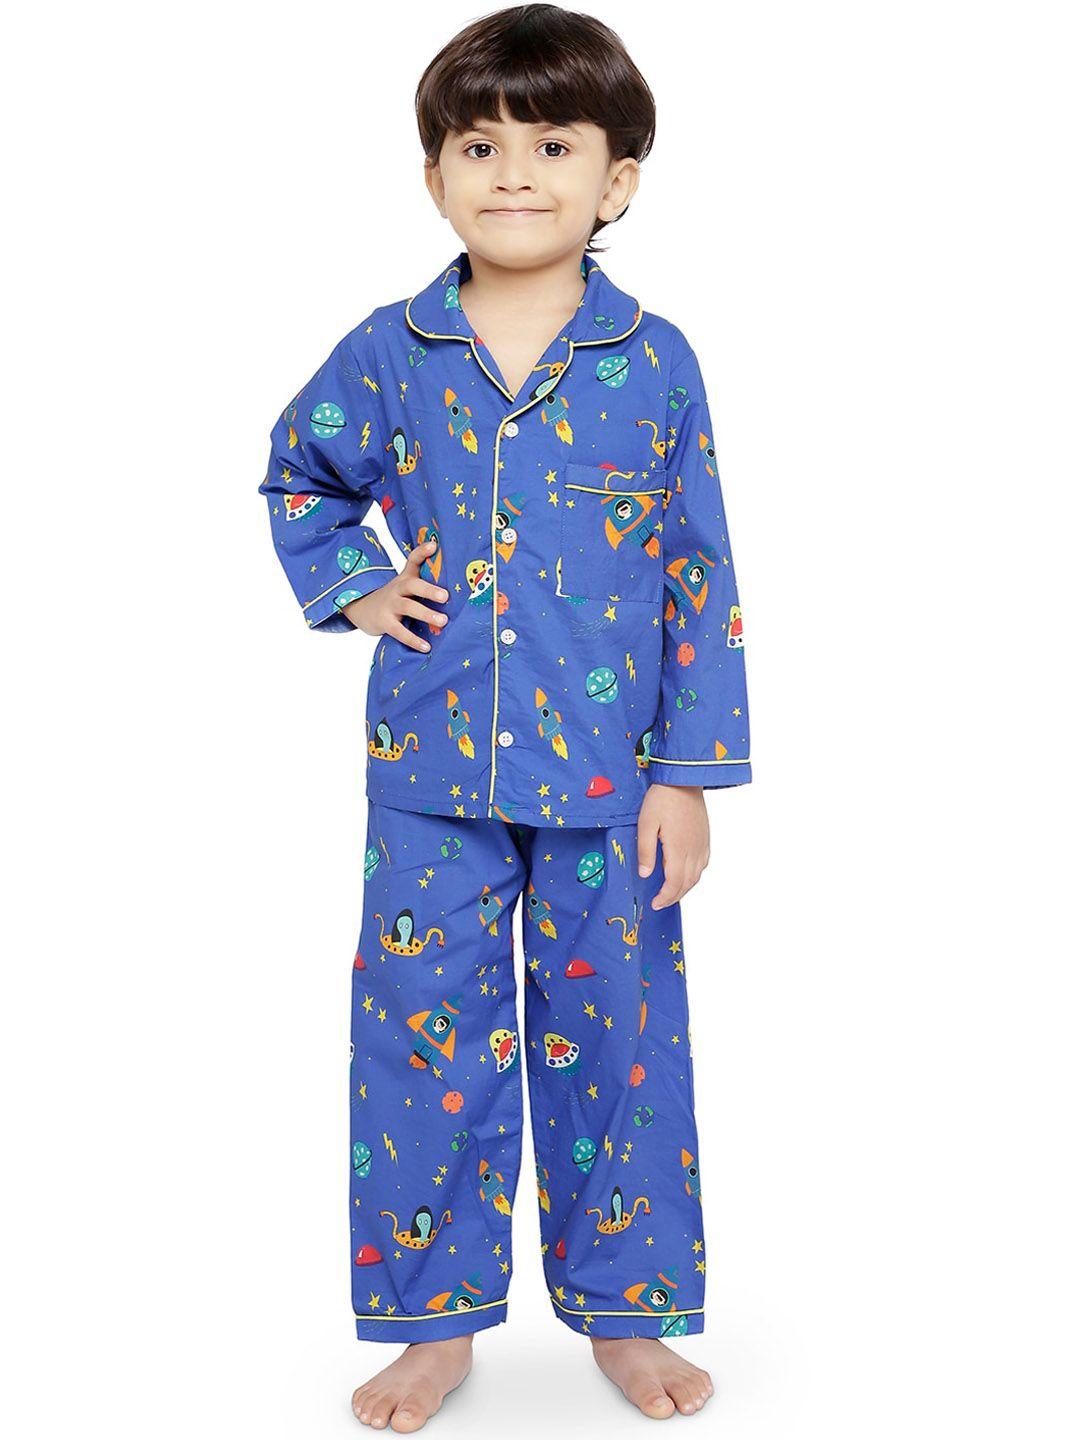 knitting doodles unisex kids blue & yellow printed night suit